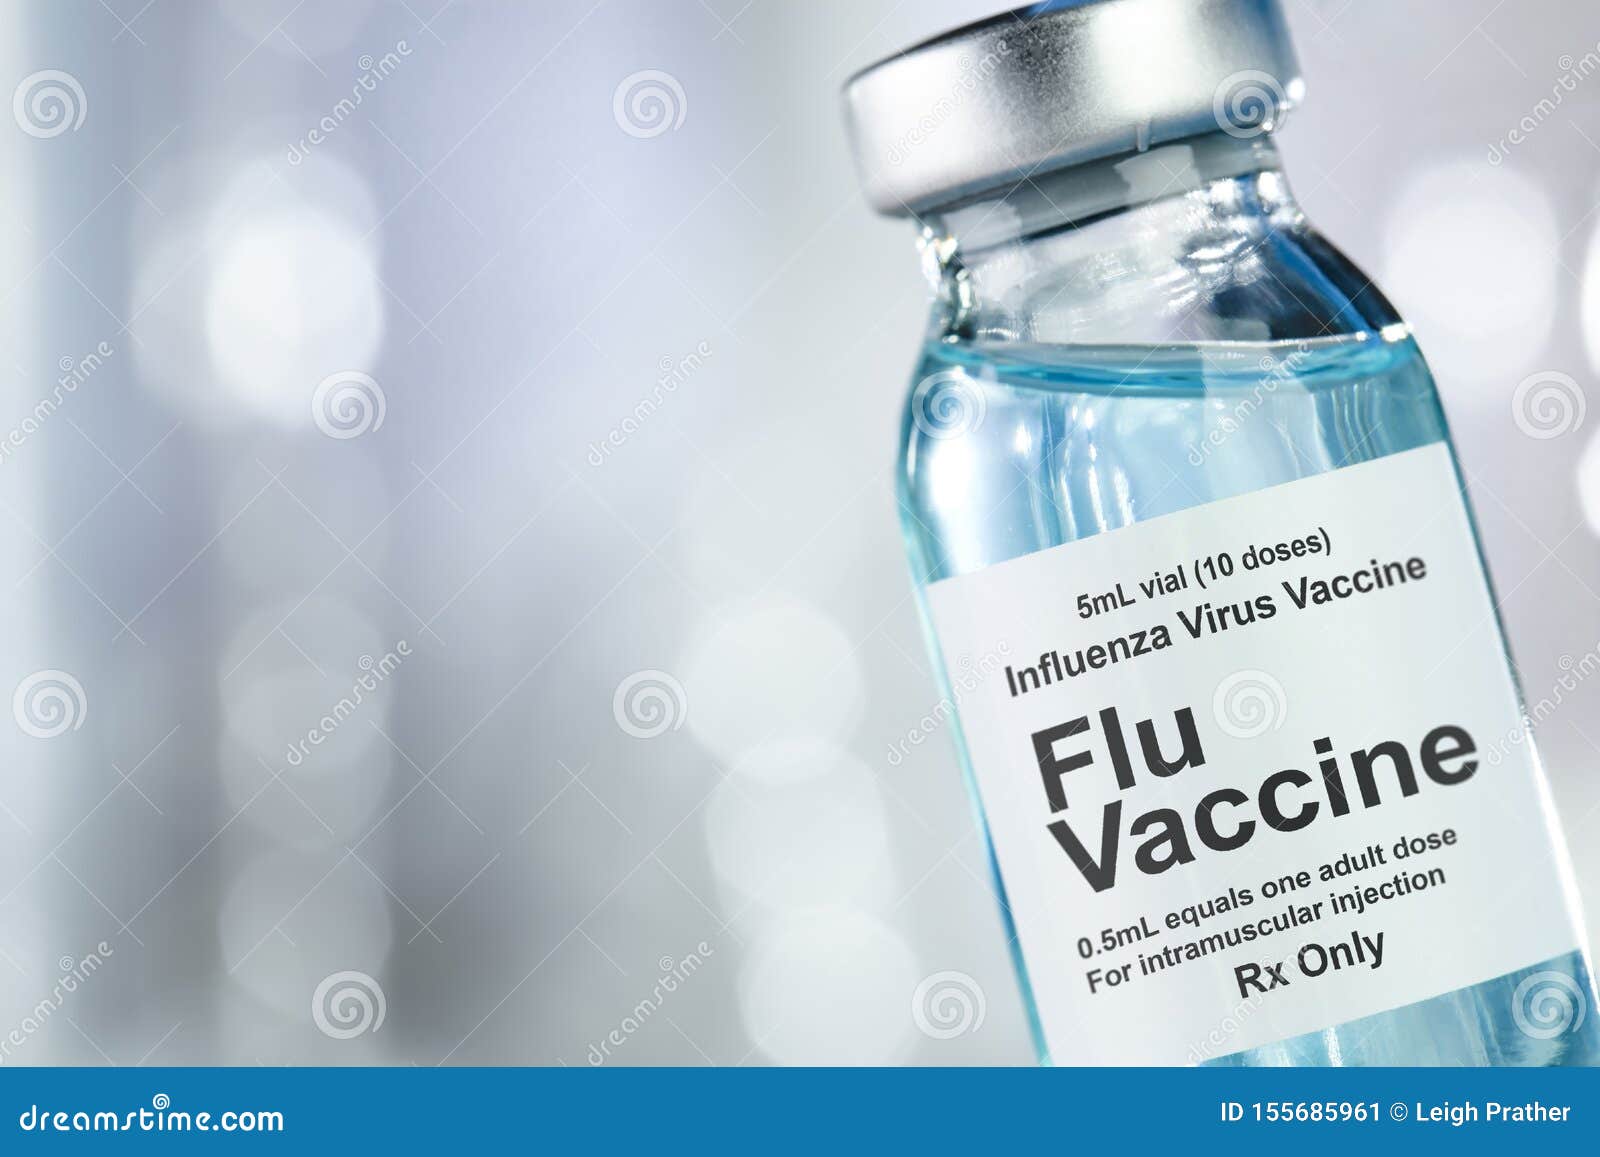 drug vial with influenza vaccine